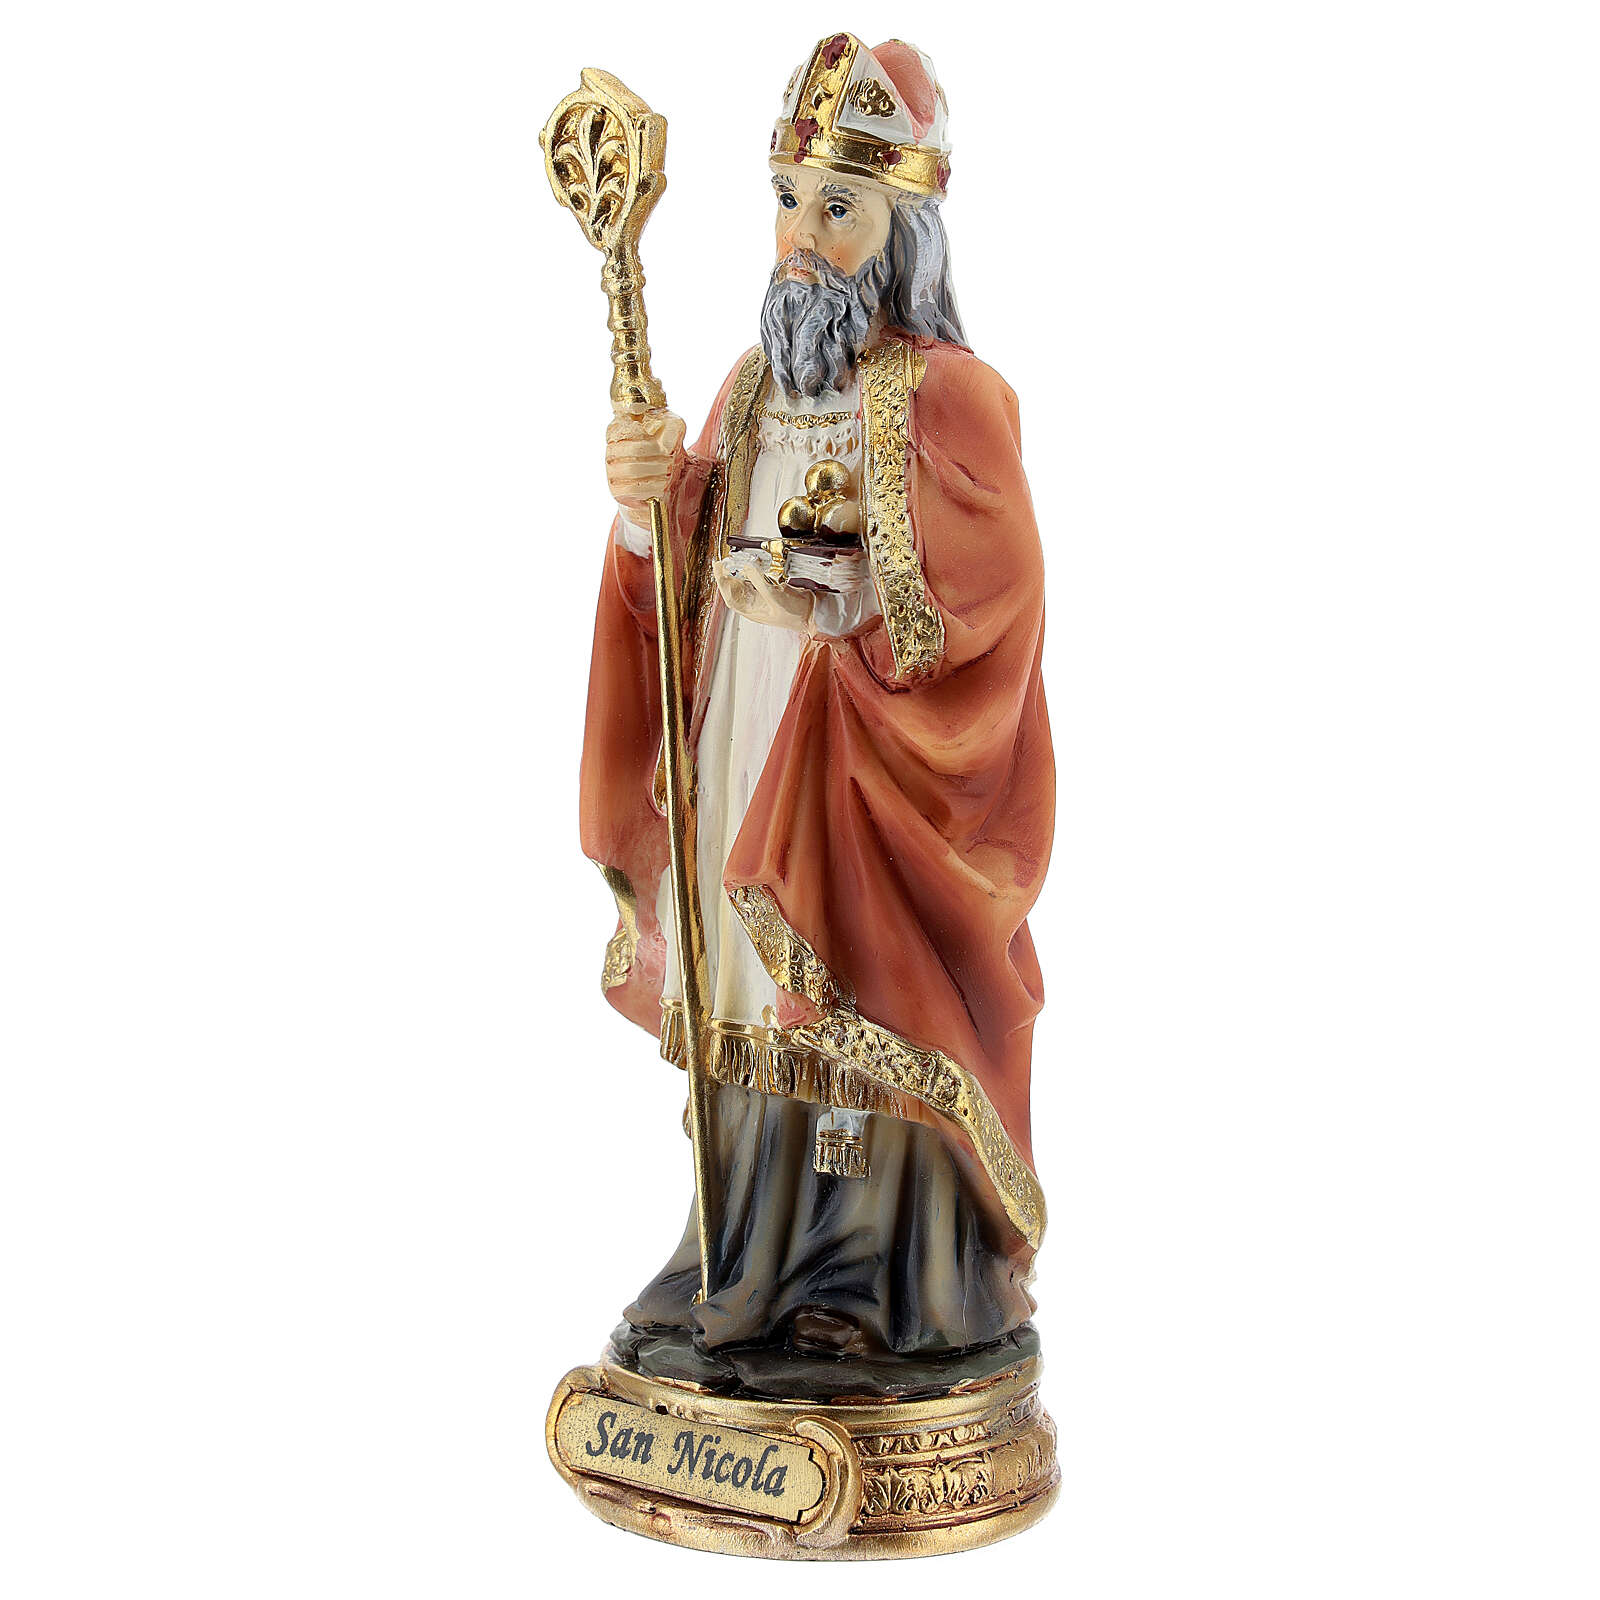 Saint Nicholas of Bari statue crosier resin 12 cm | online sales on ...